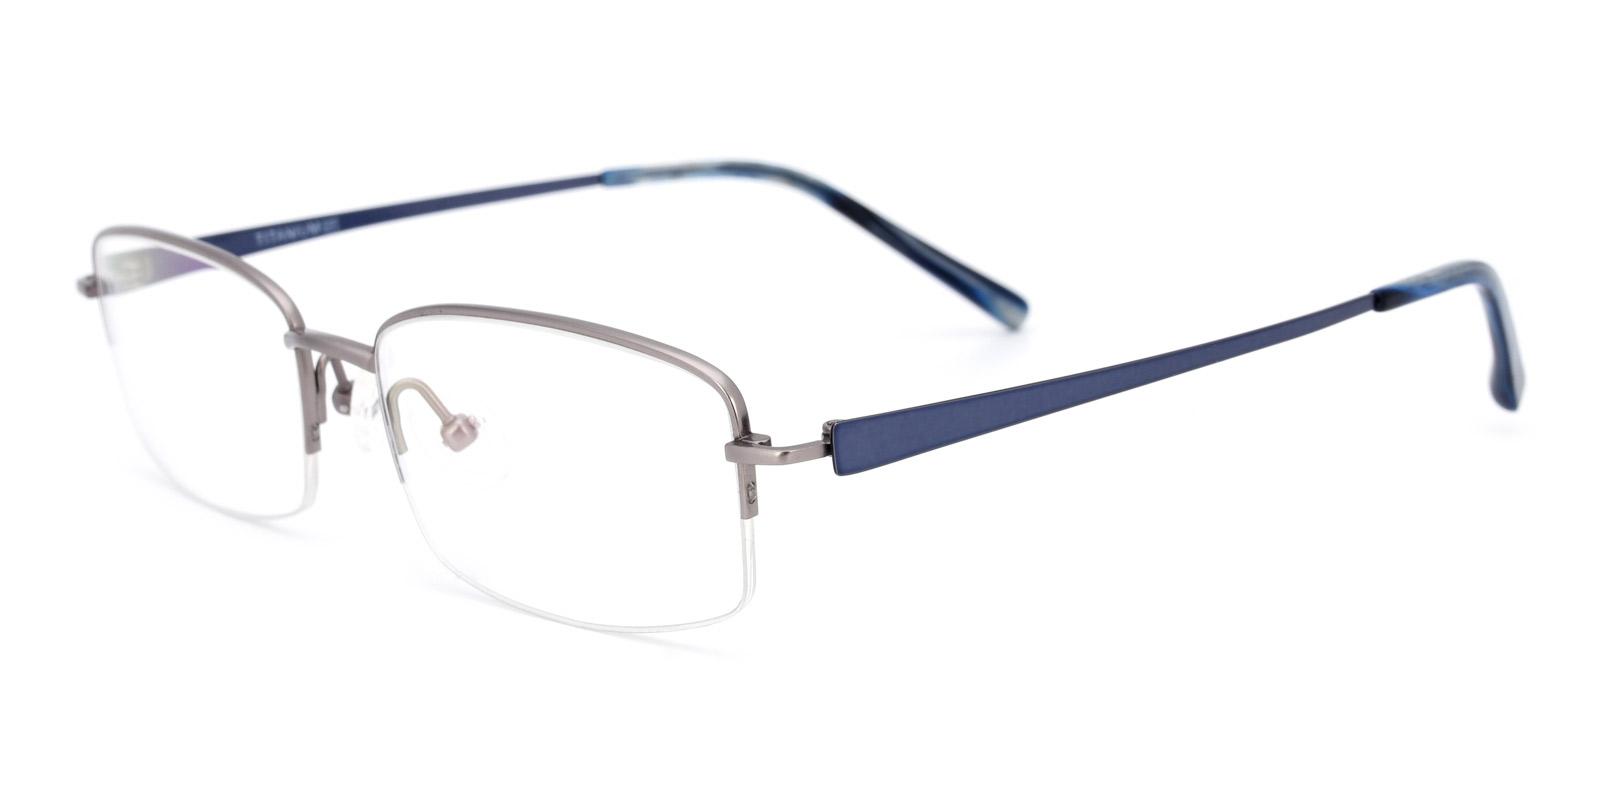 Leave-Blue-Rectangle-Titanium-Eyeglasses-detail